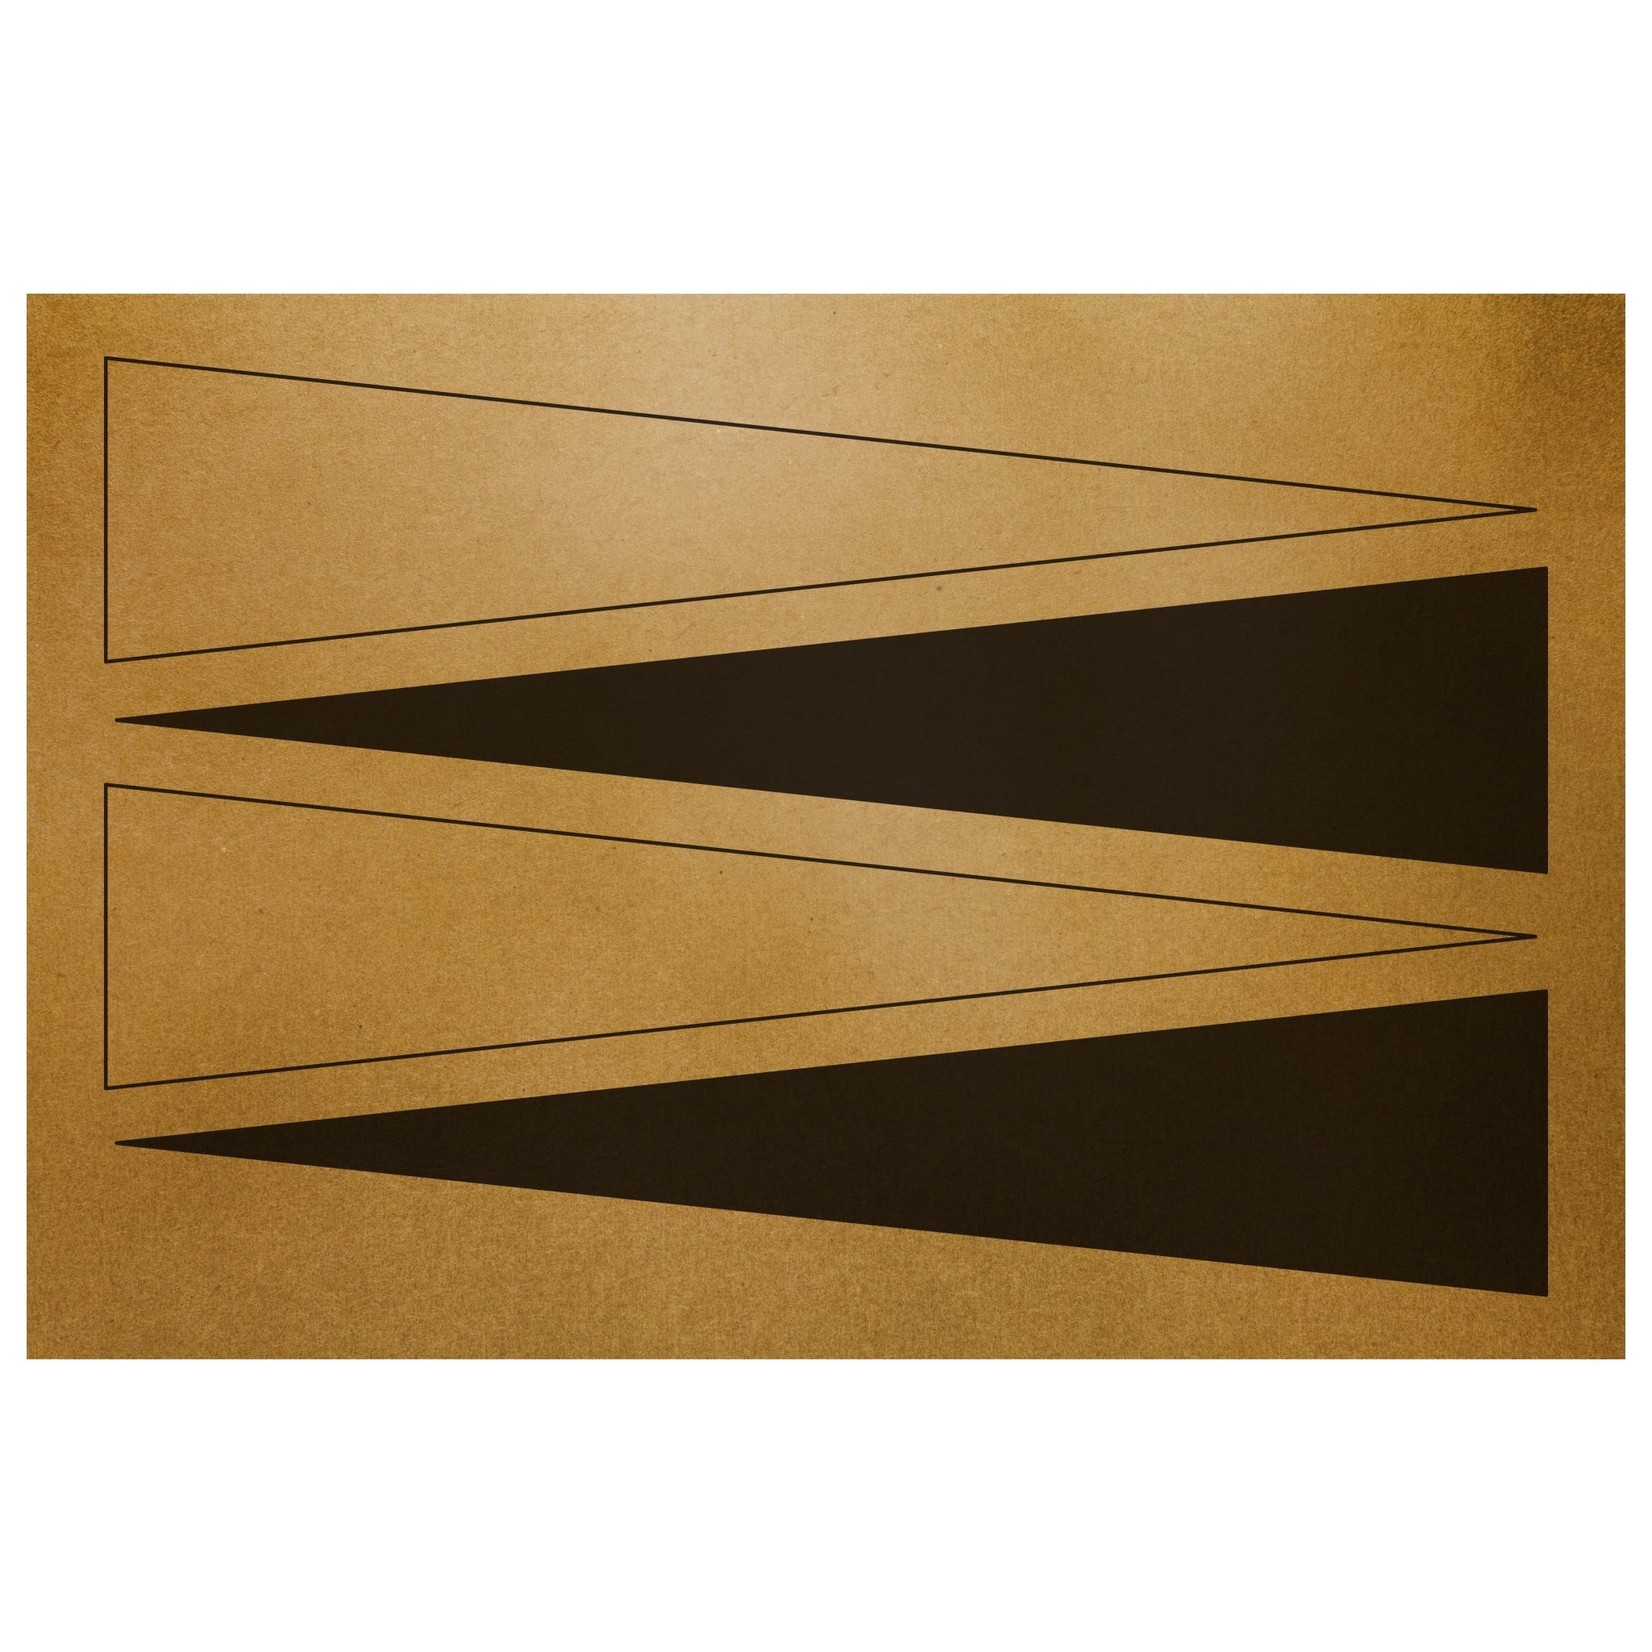 Framed Print on Rag Paper: Study in Symetry by Alejandro Franseschini